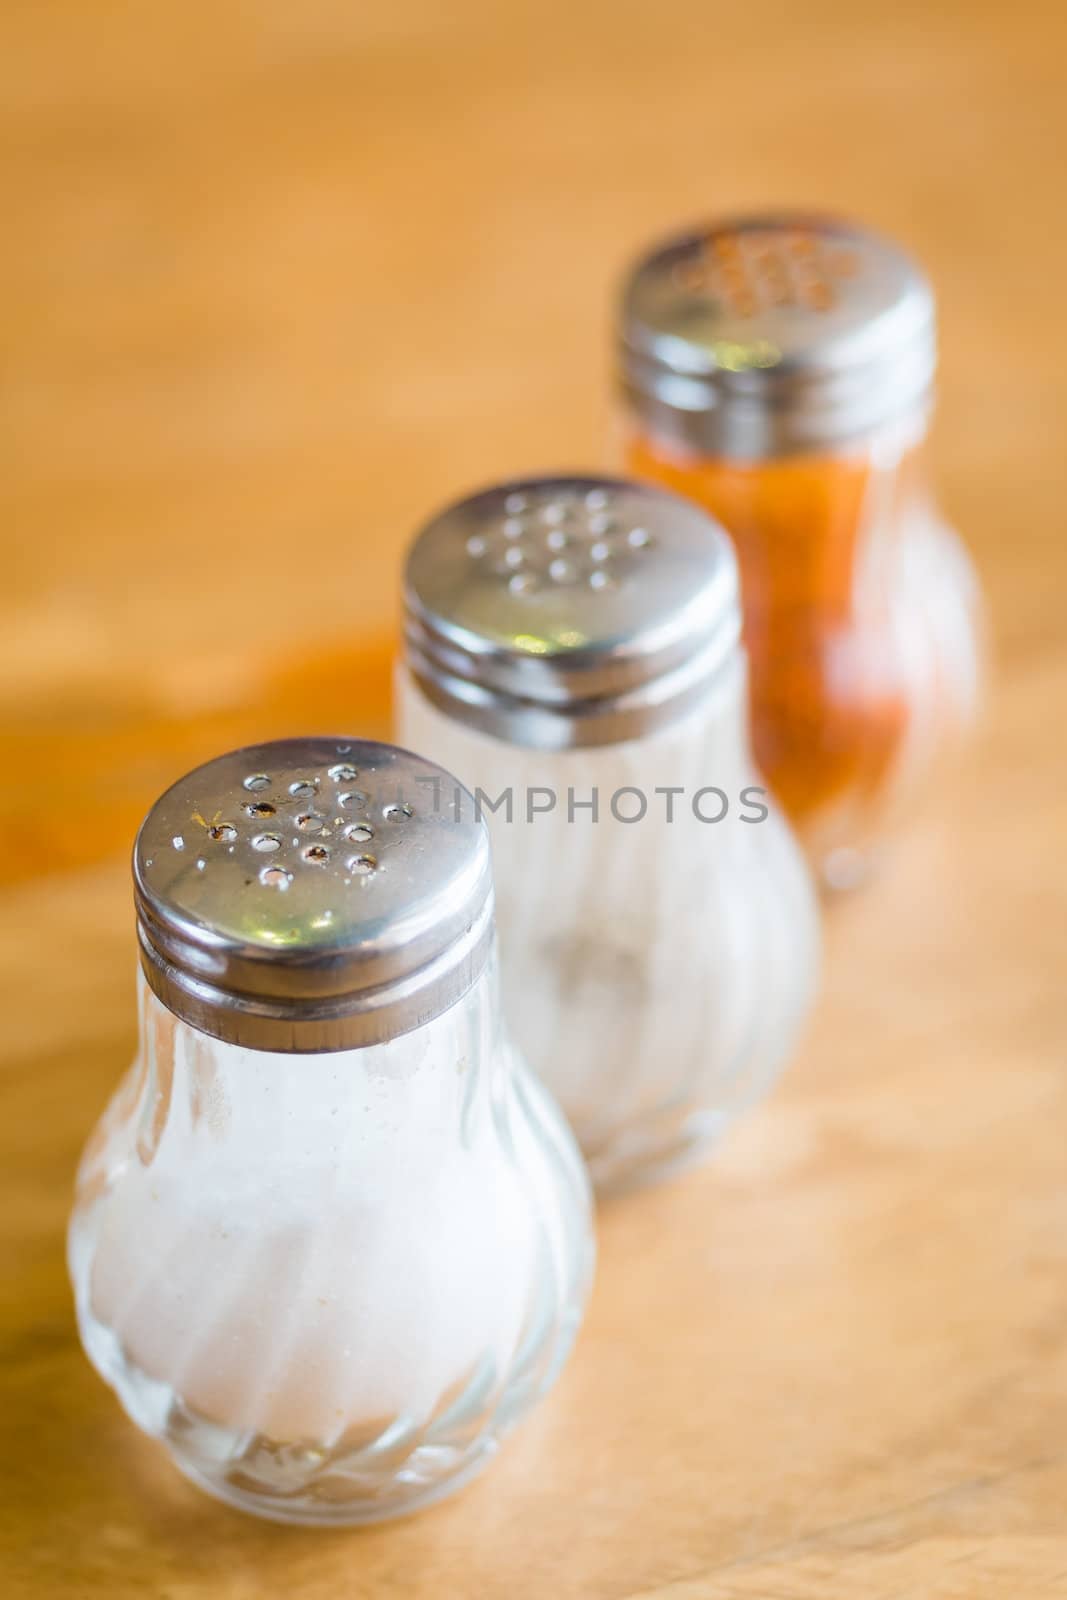 shaker glass bottle of salt and pepper for garnish food